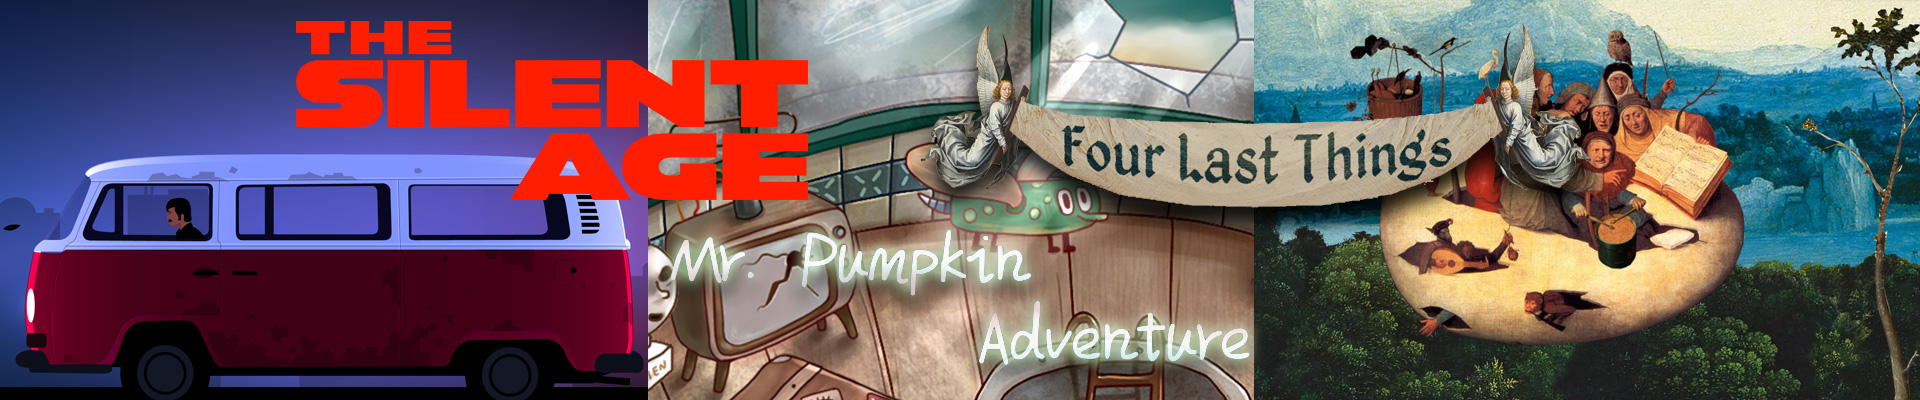 Мысли про: The Silent Age, Mr. Pumpkin Adventure и Four Last Things